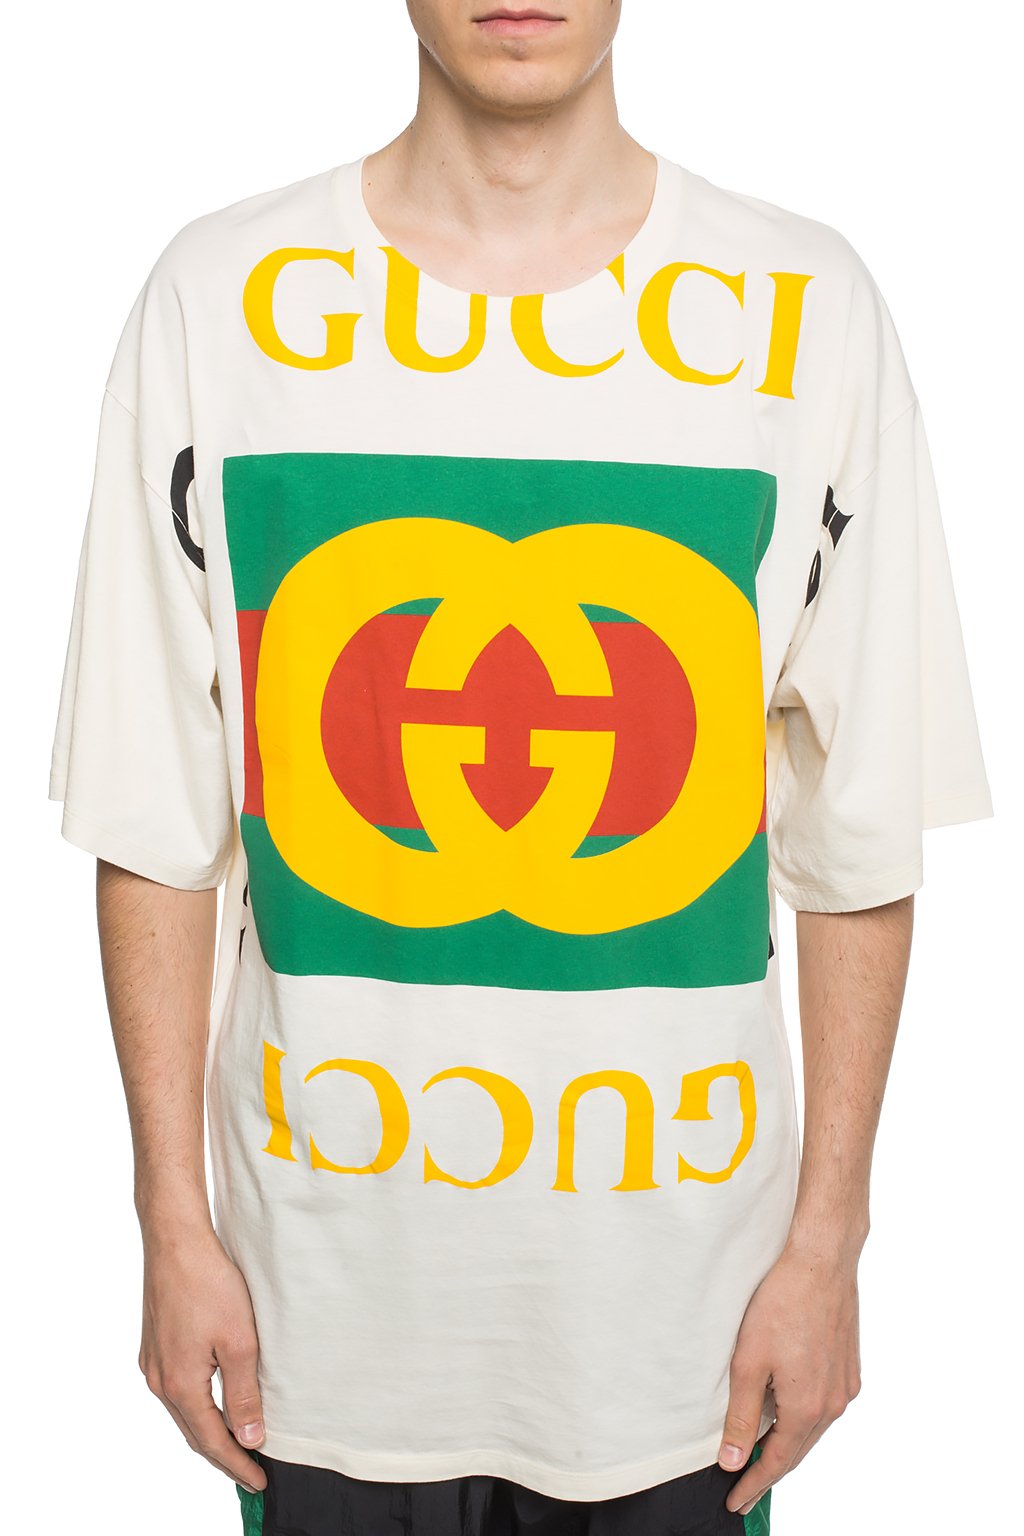 Gucci Men's Authenticated T-Shirt